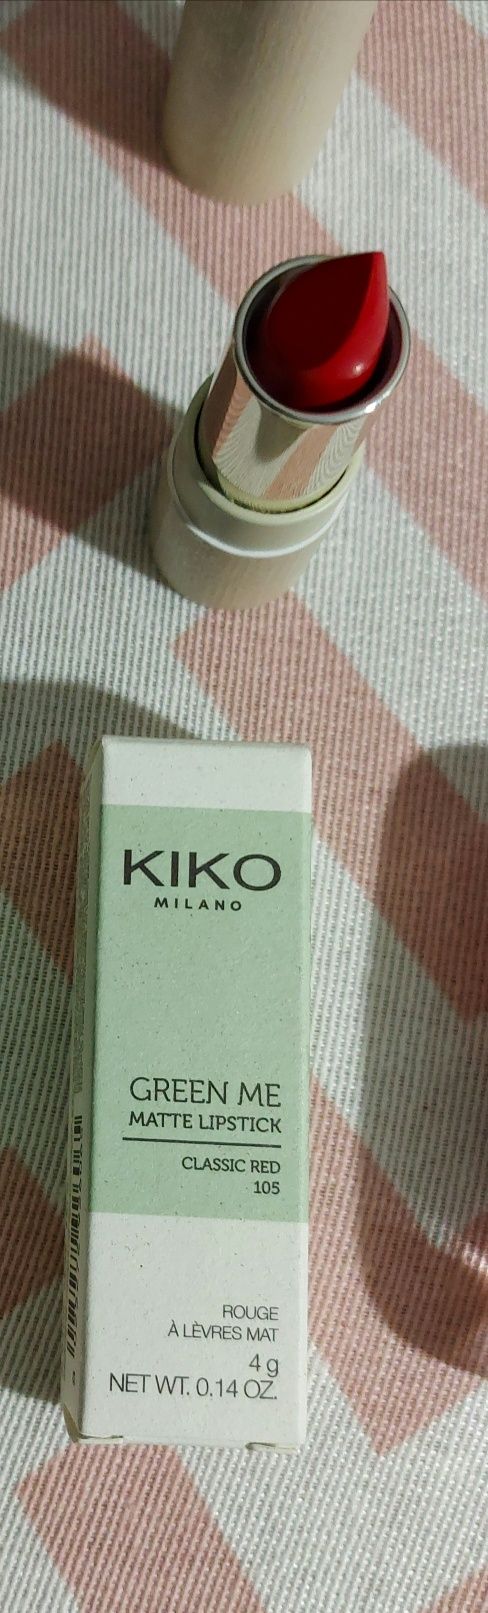 Kiko Green me mate lipstick NOVOS